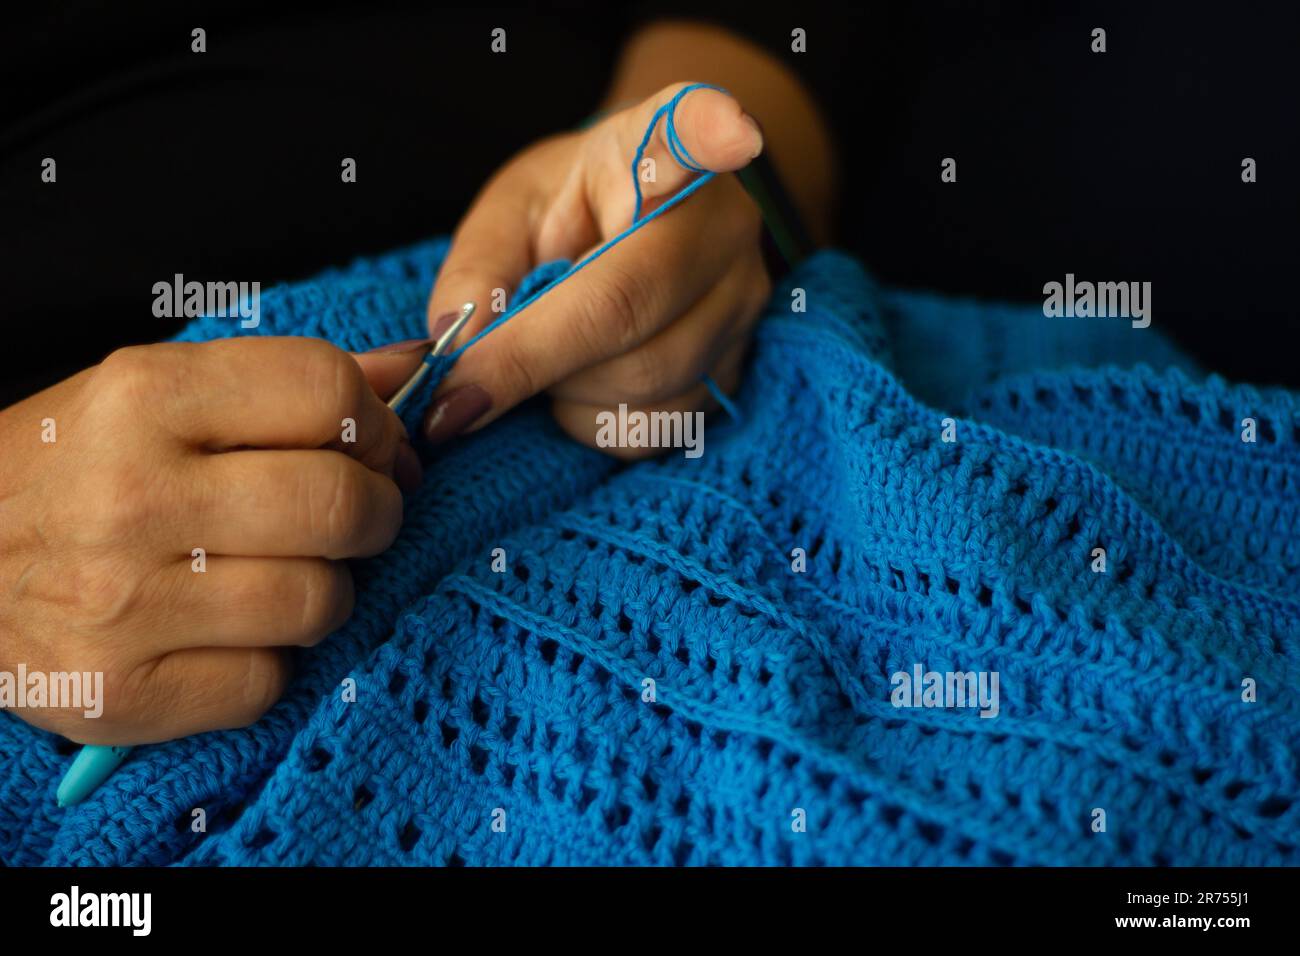 Crochet. Woman Crochet Blue Yarn. Close-up Of The Hands. Stock Photo